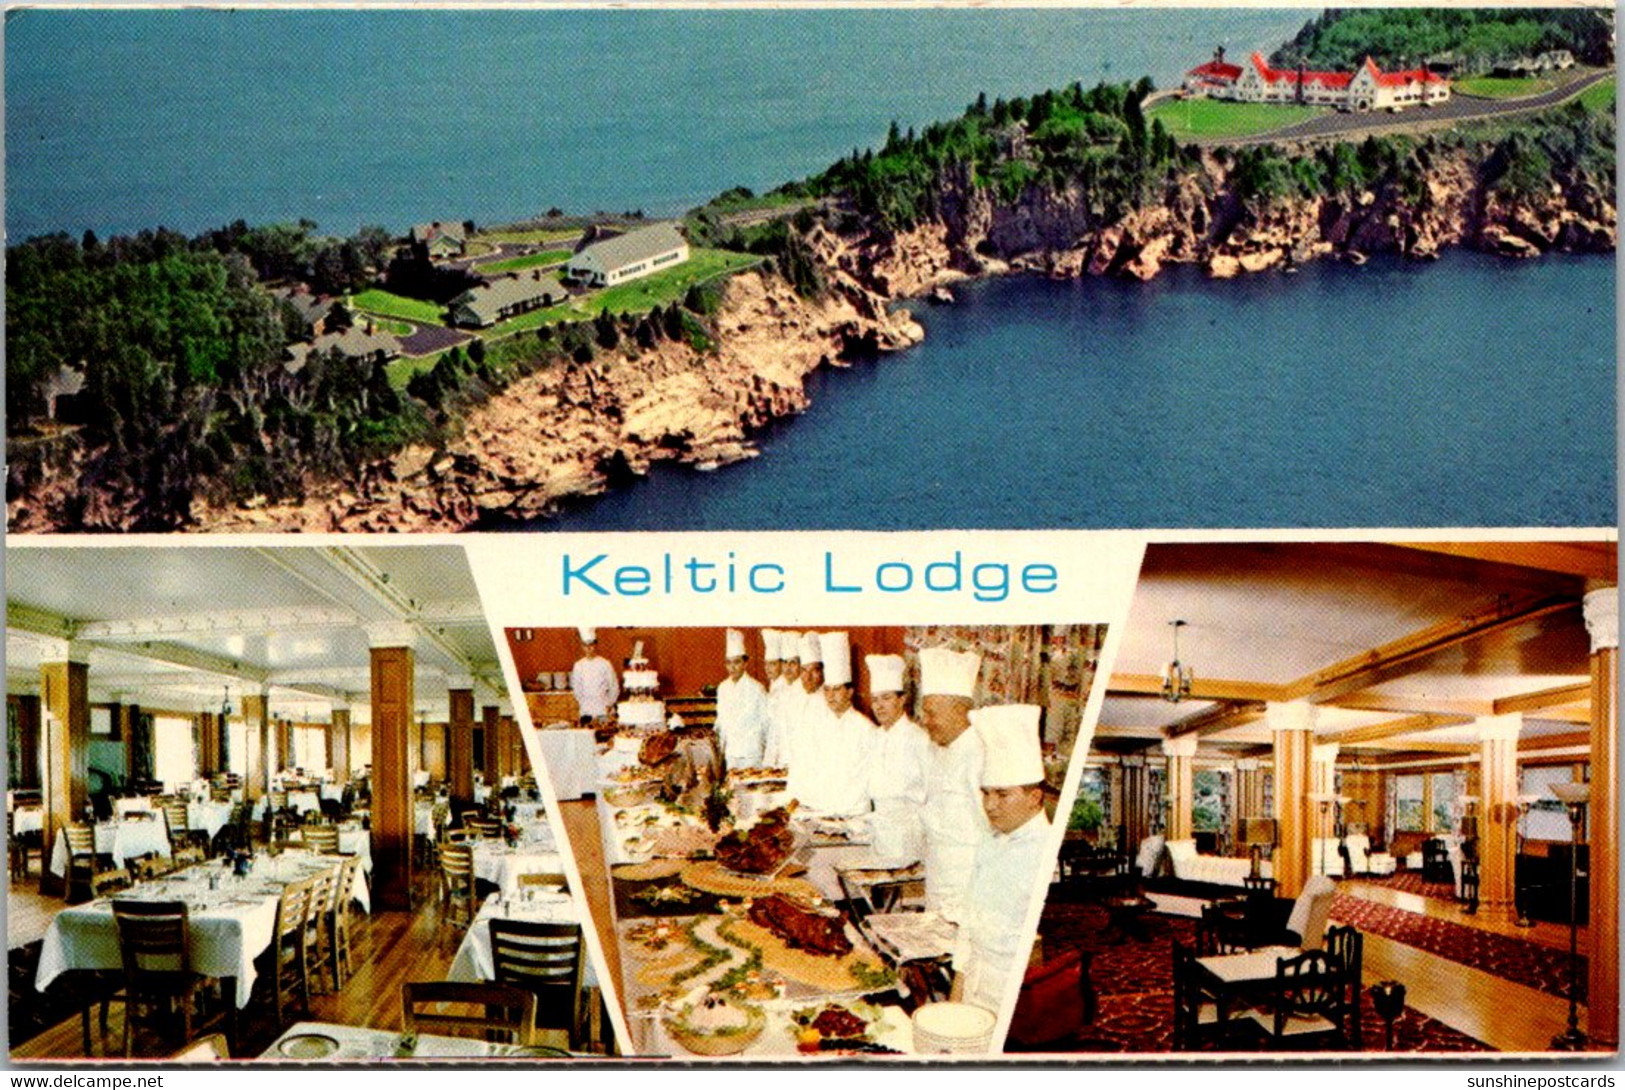 Canada Nova Scotia Caape Breton The Keltic Lodge Multi View - Cape Breton